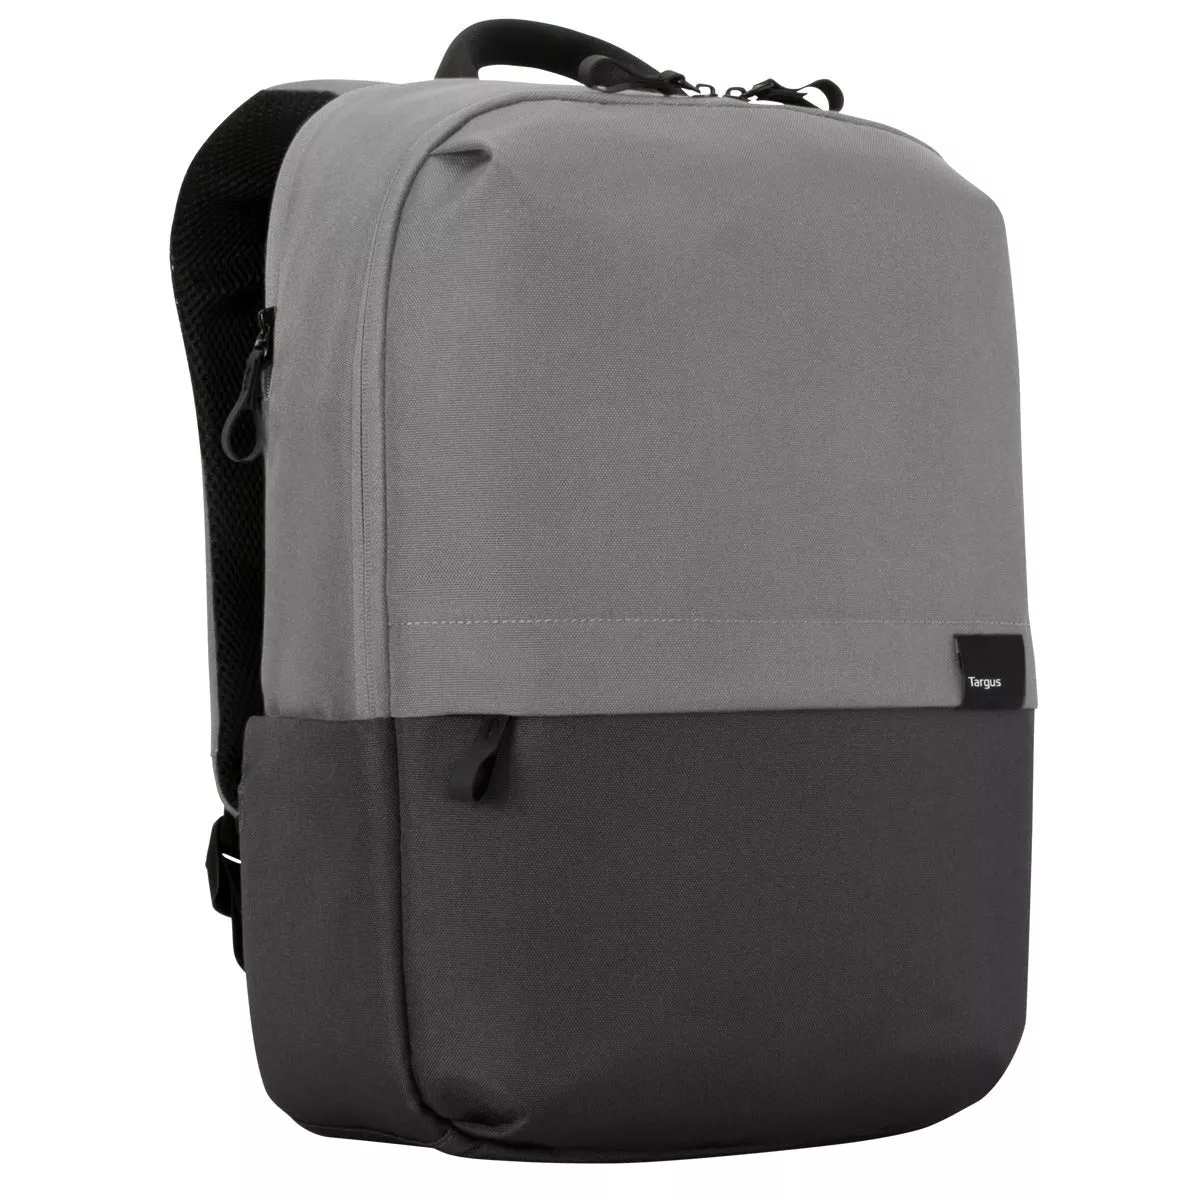 Revendeur officiel TARGUS 15.6p Sagano Commuter Backpack Grey